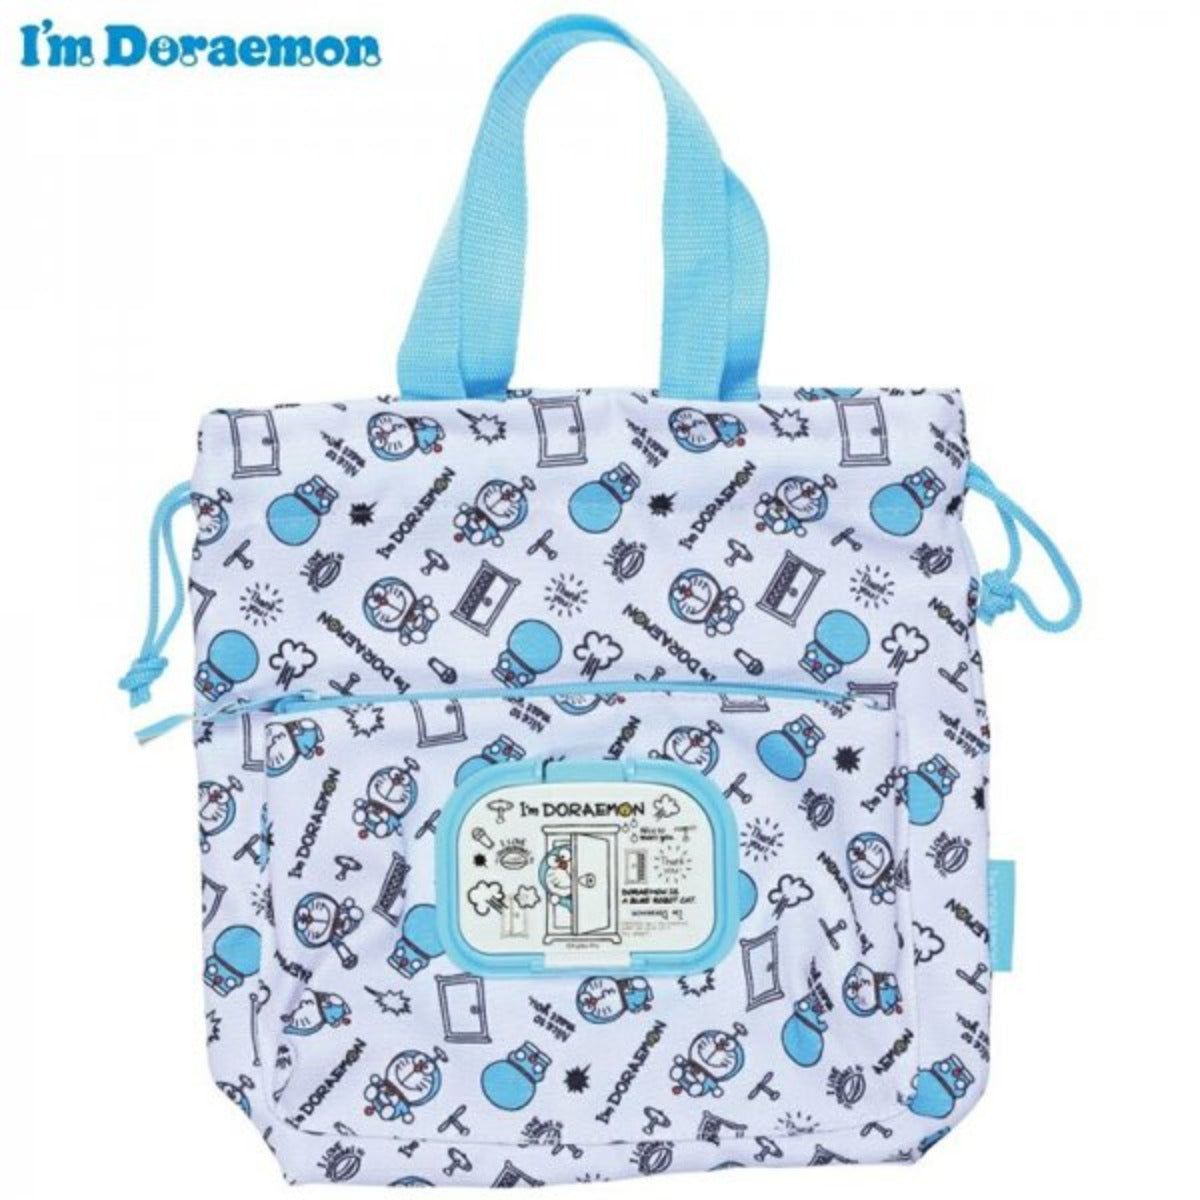 String Bag - Doraemon Diaper (Japan Edition)